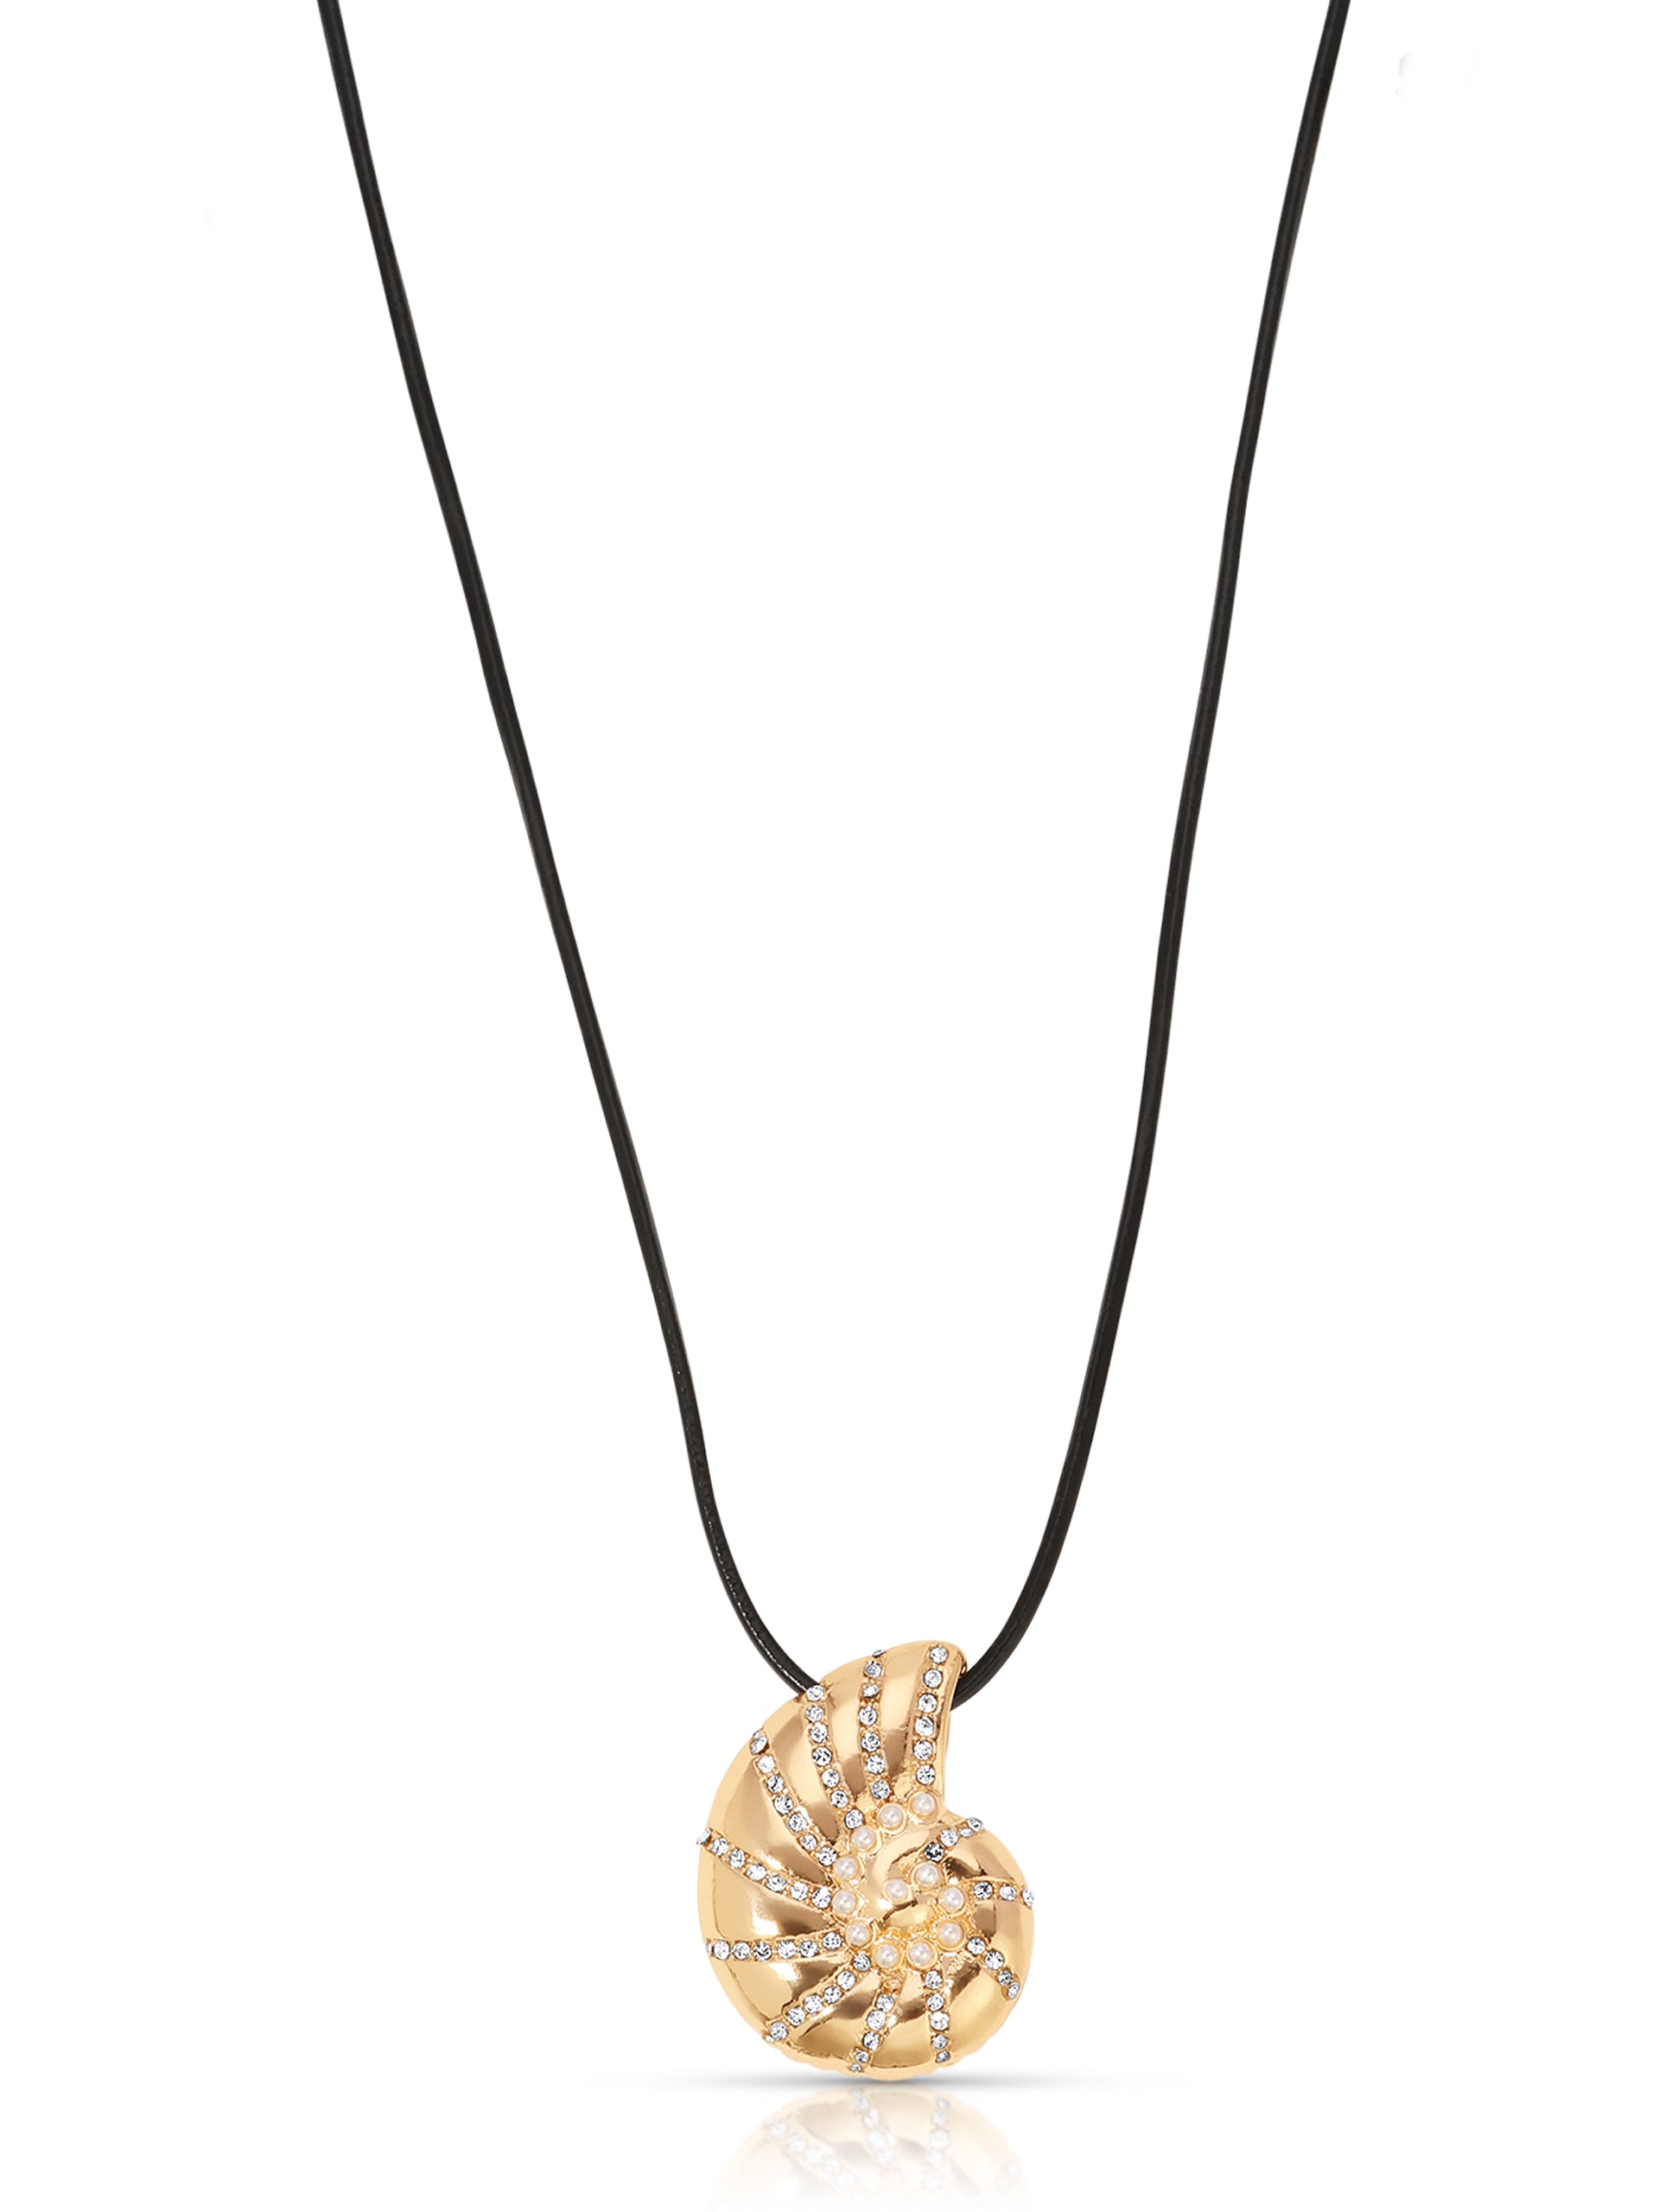 Nautilus Shell Pendant Black Cord Necklace